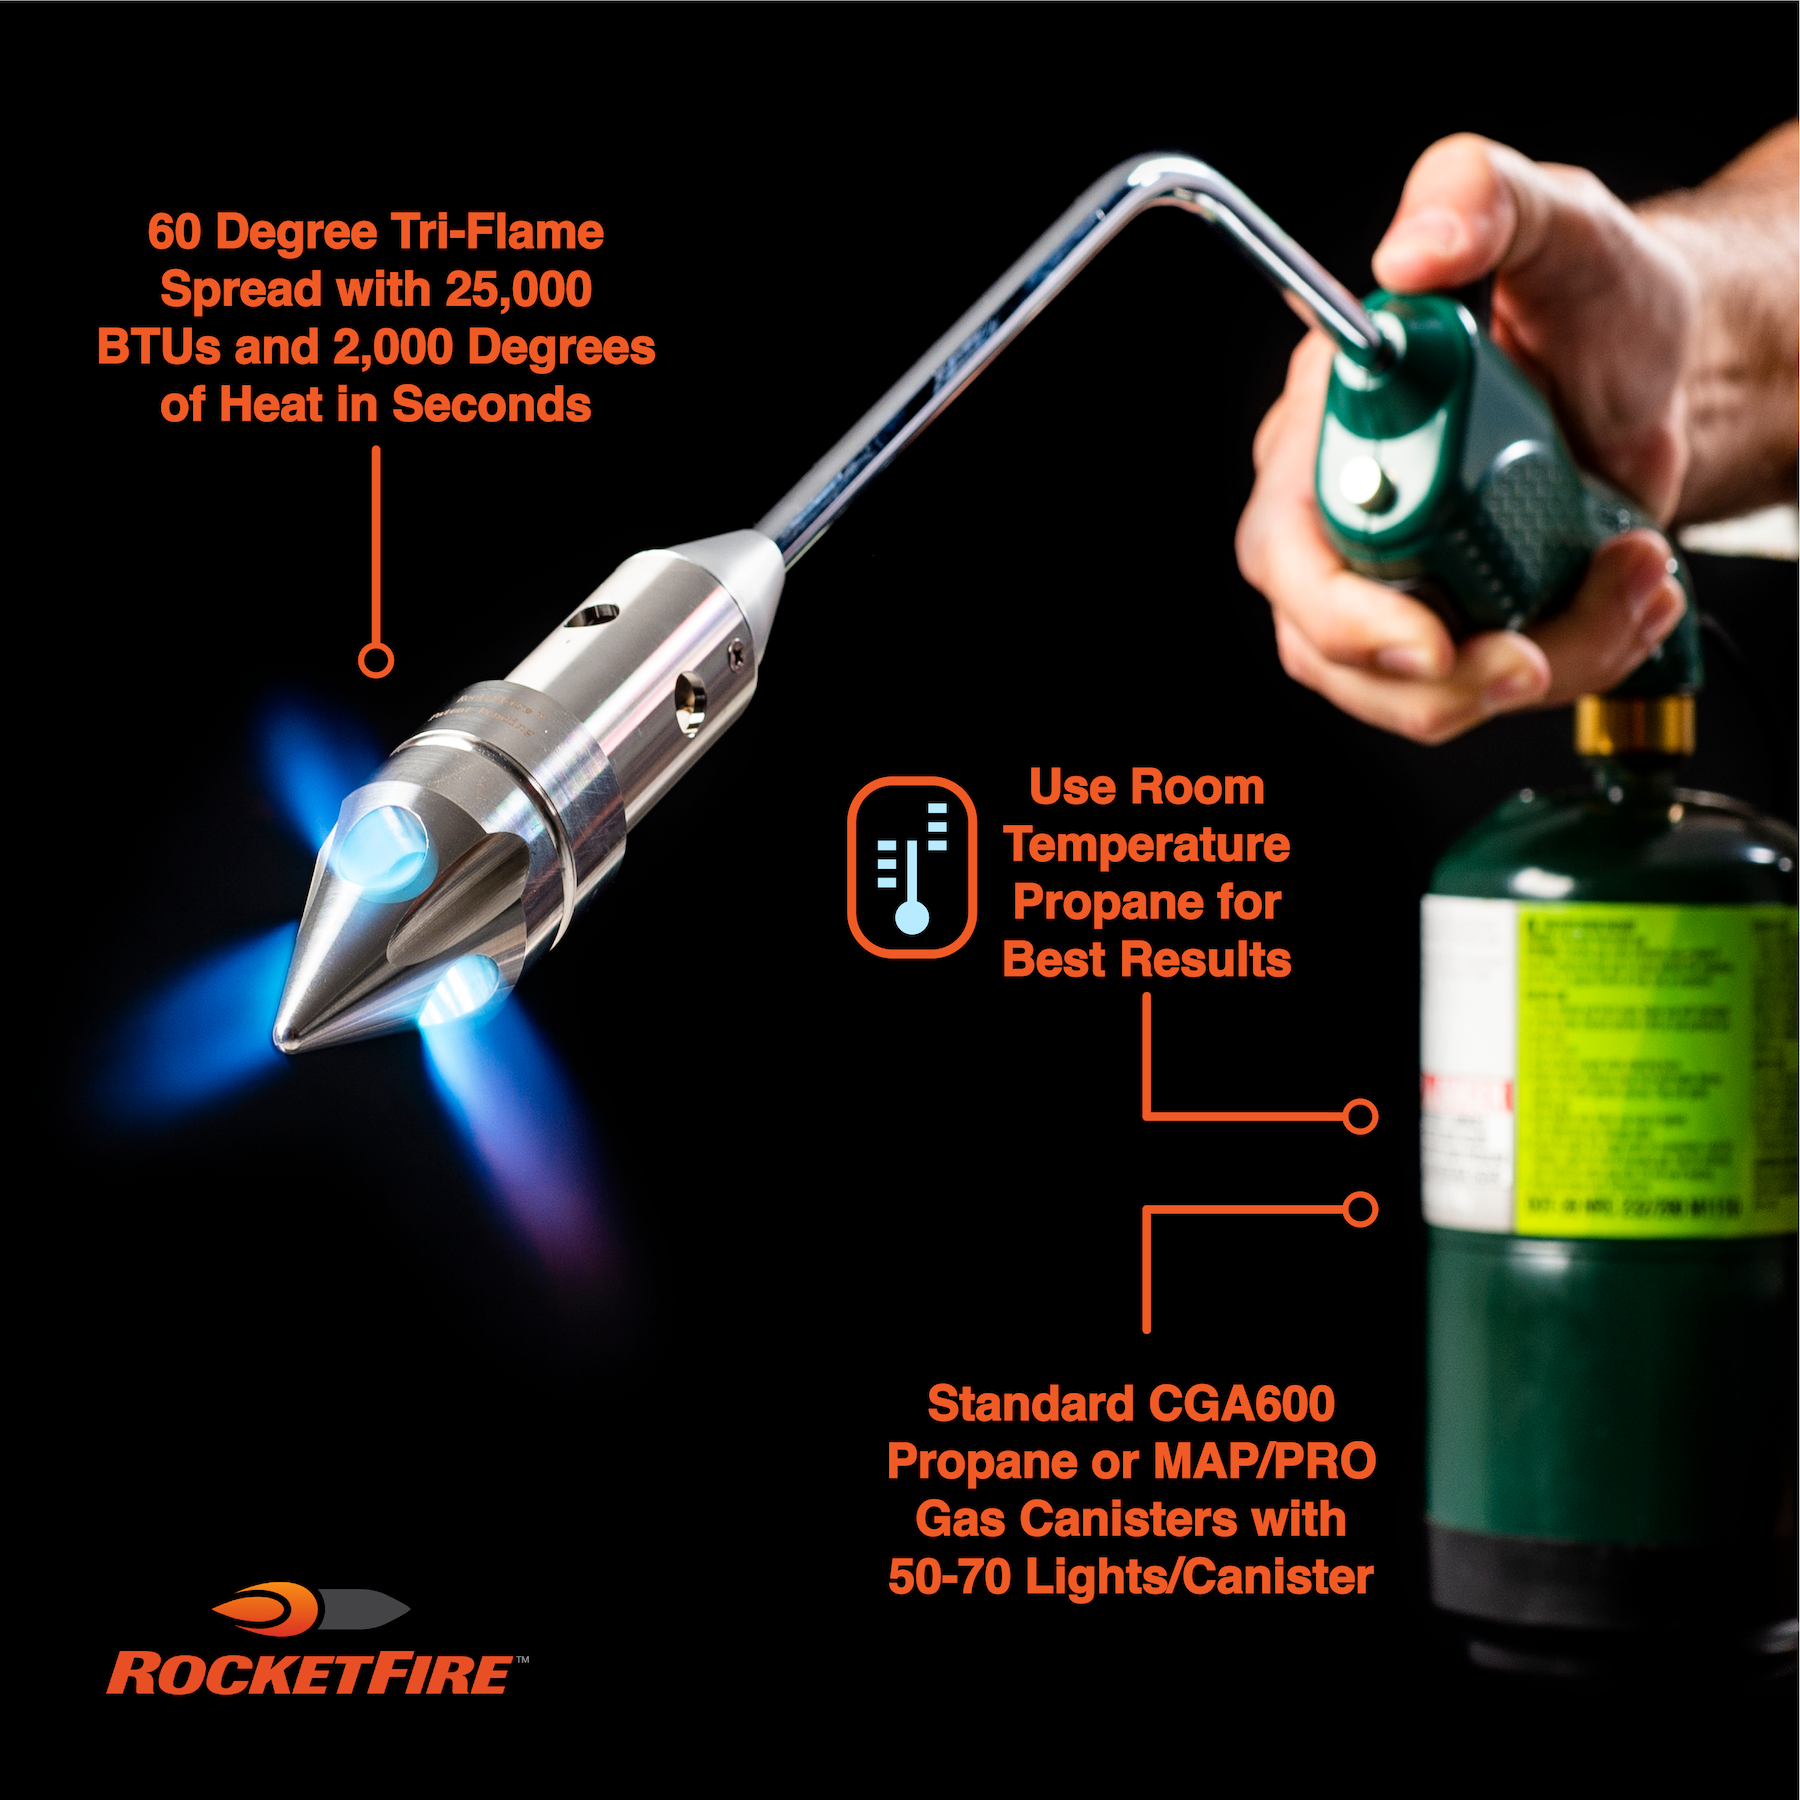 The RocketFire™ Torch & Case Bundle